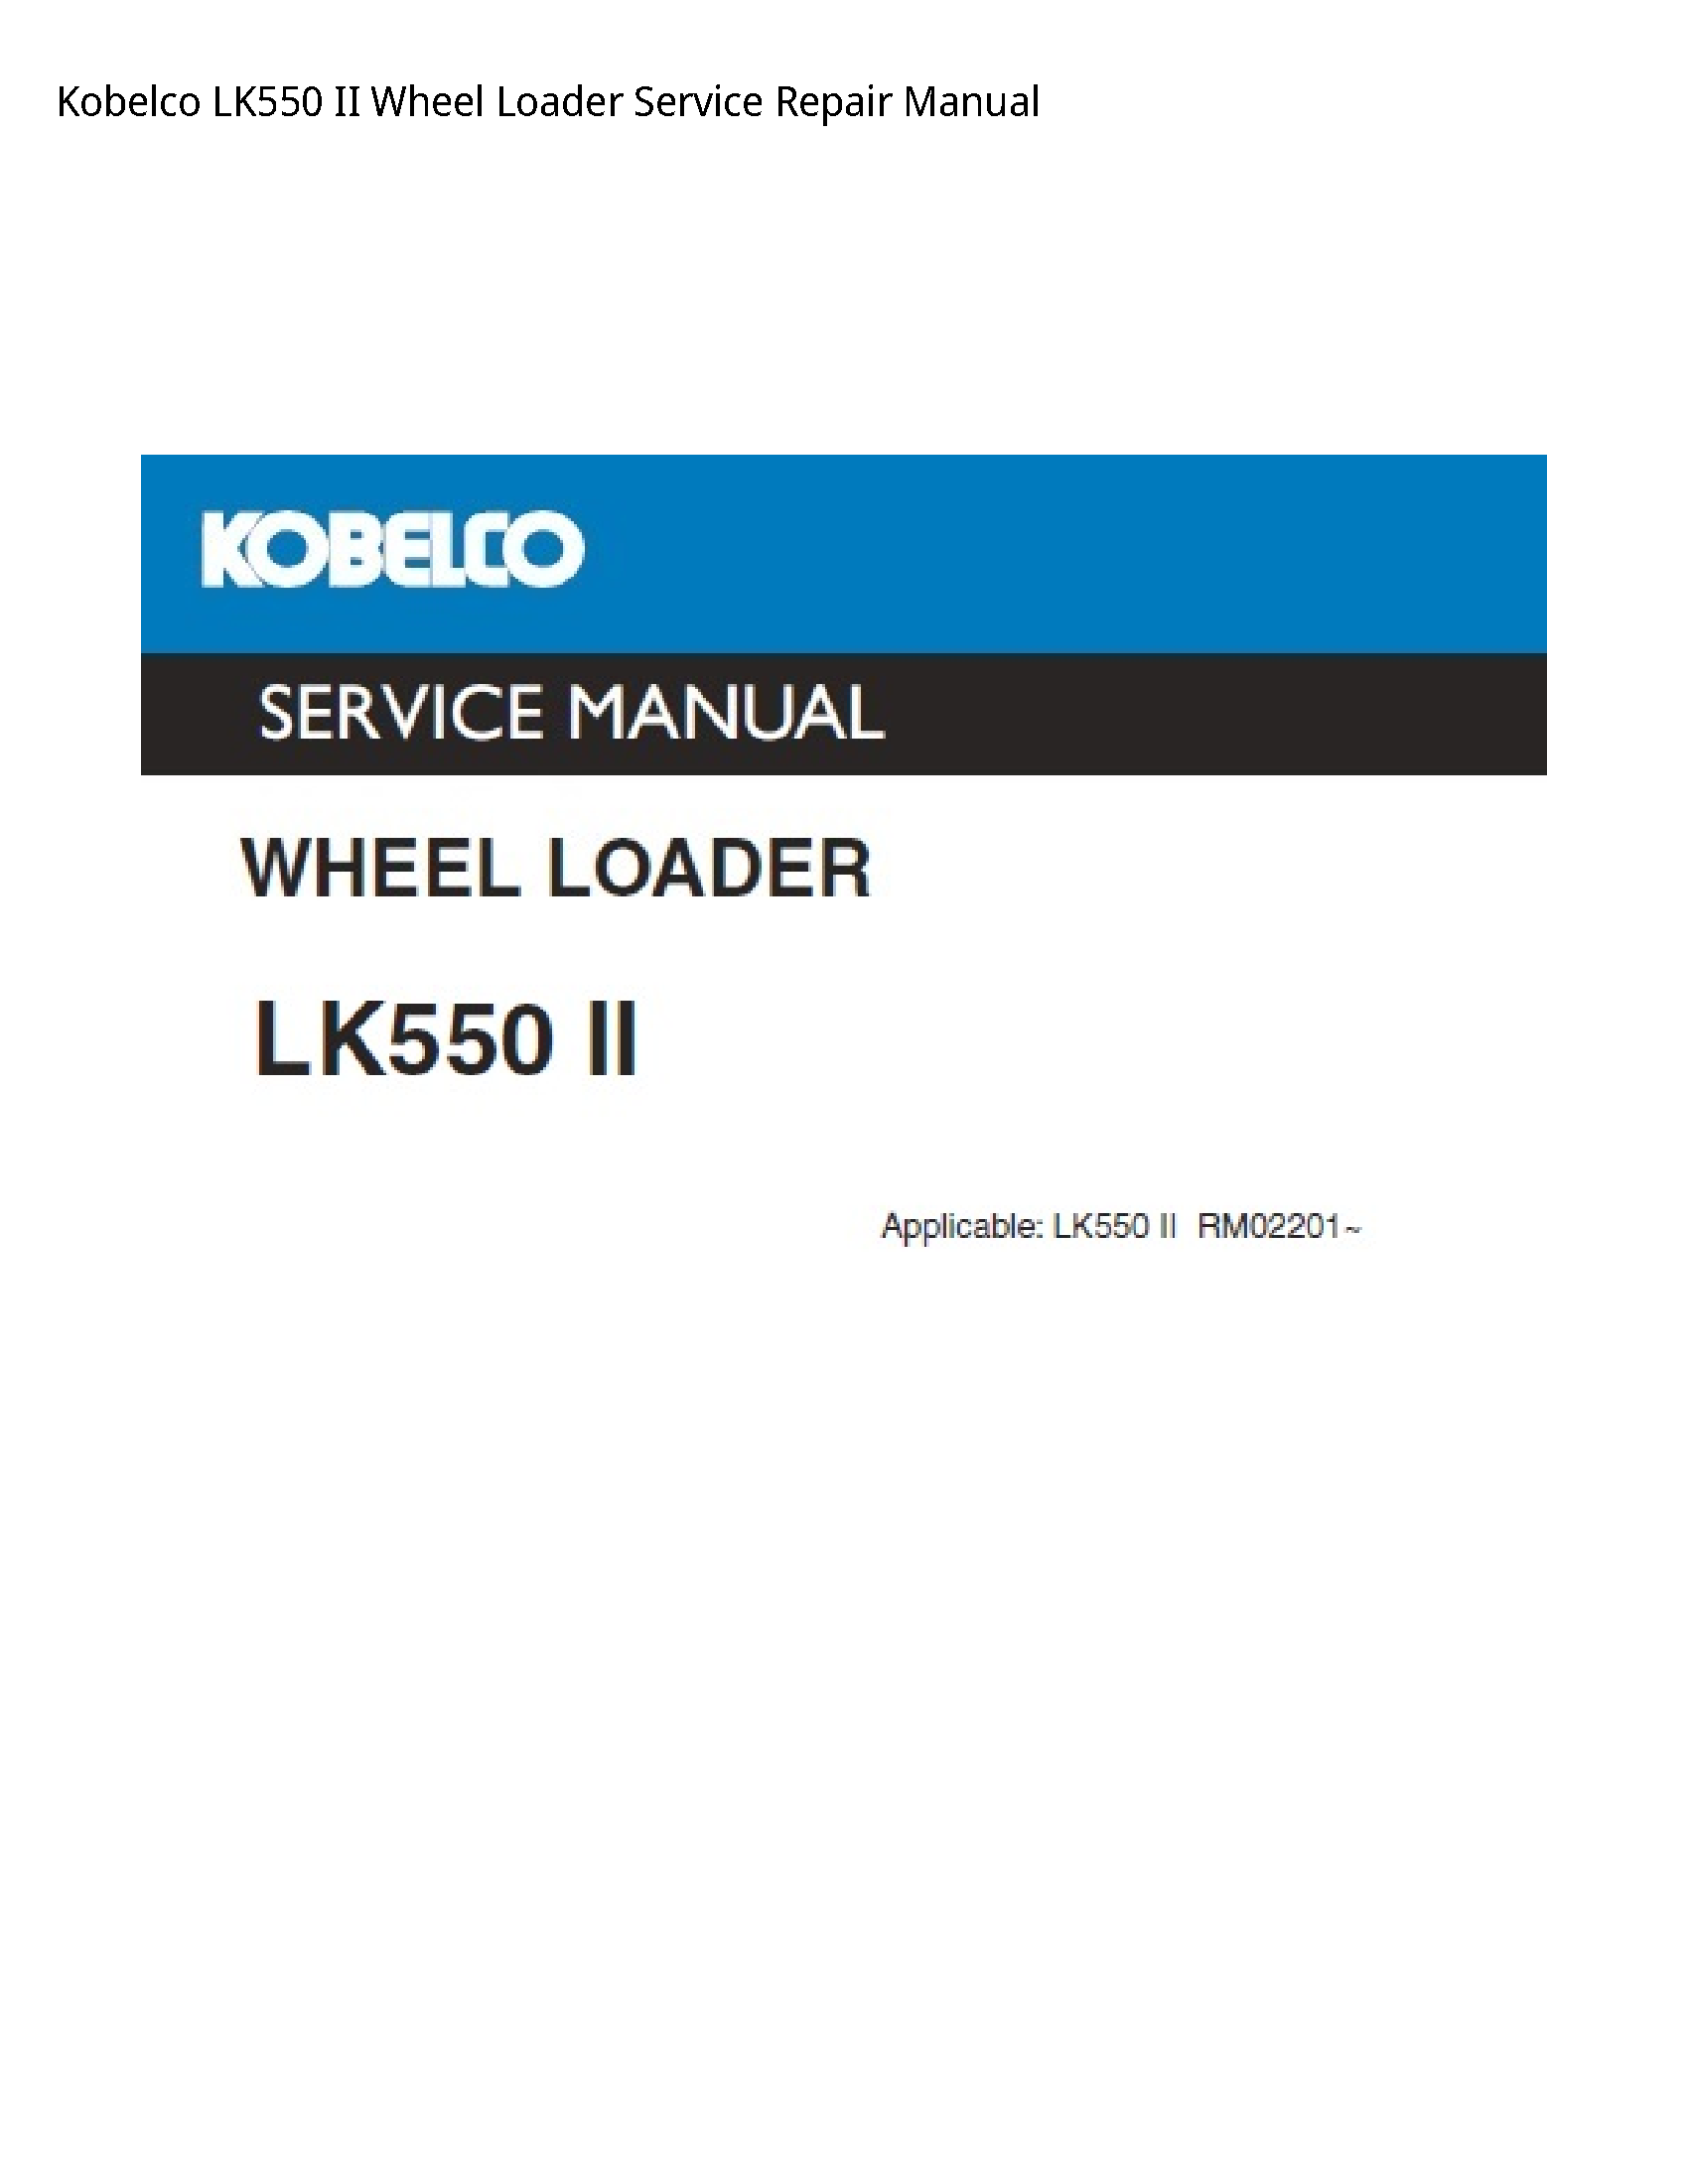 Kobelco LK550 II Wheel Loader manual